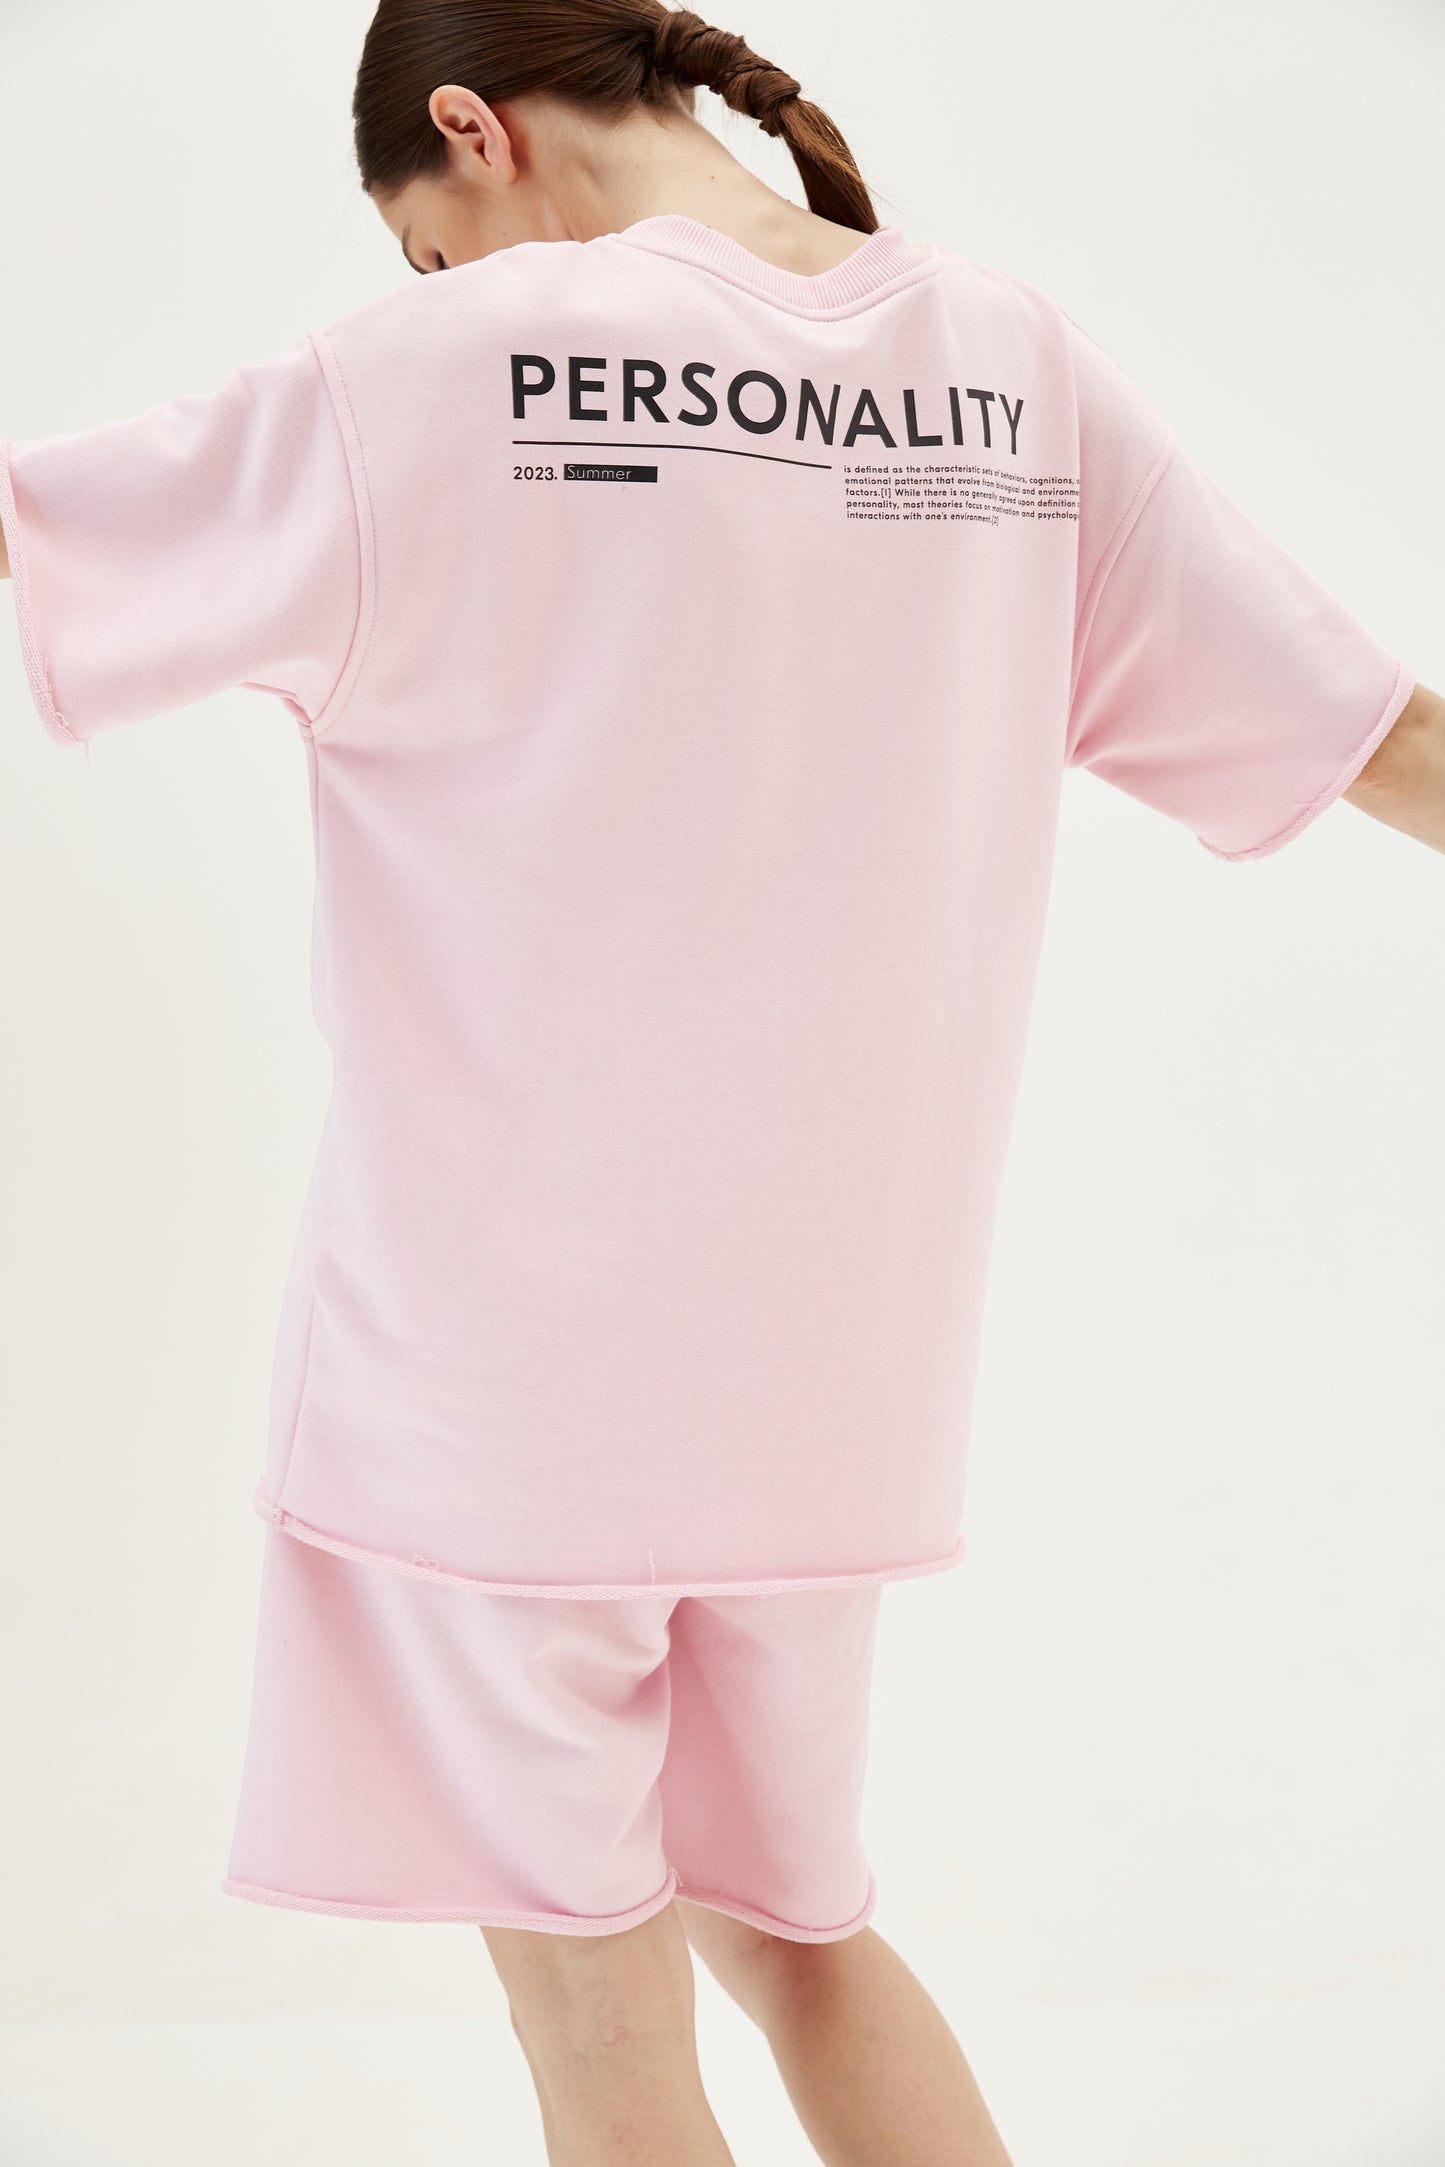 T-Shirt Personality Pink